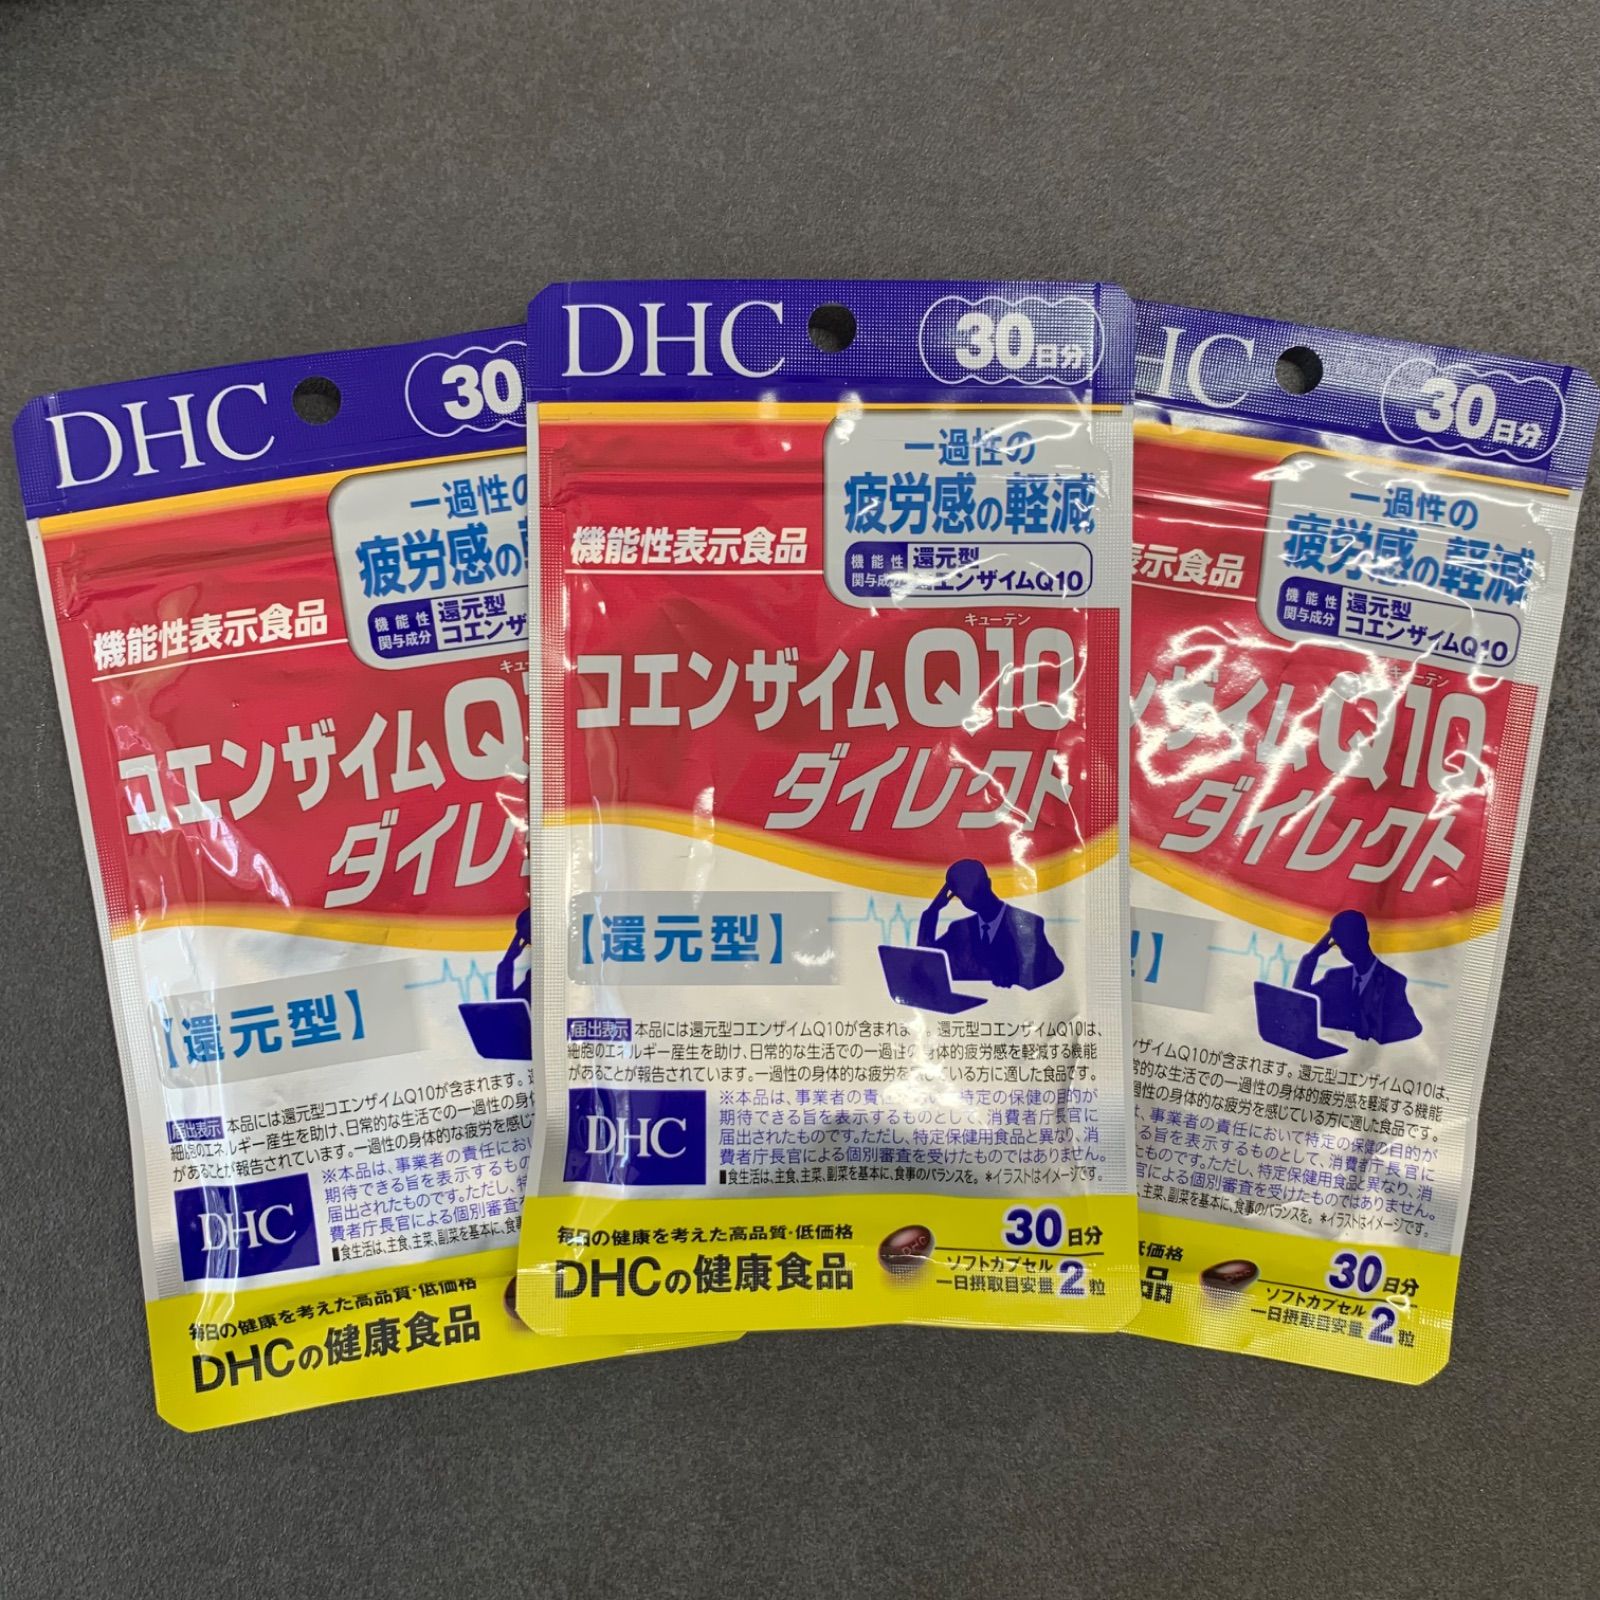 DHC コエンザイムQ10 ダイレクト 60粒×3袋セット 90日分 - メルカリ